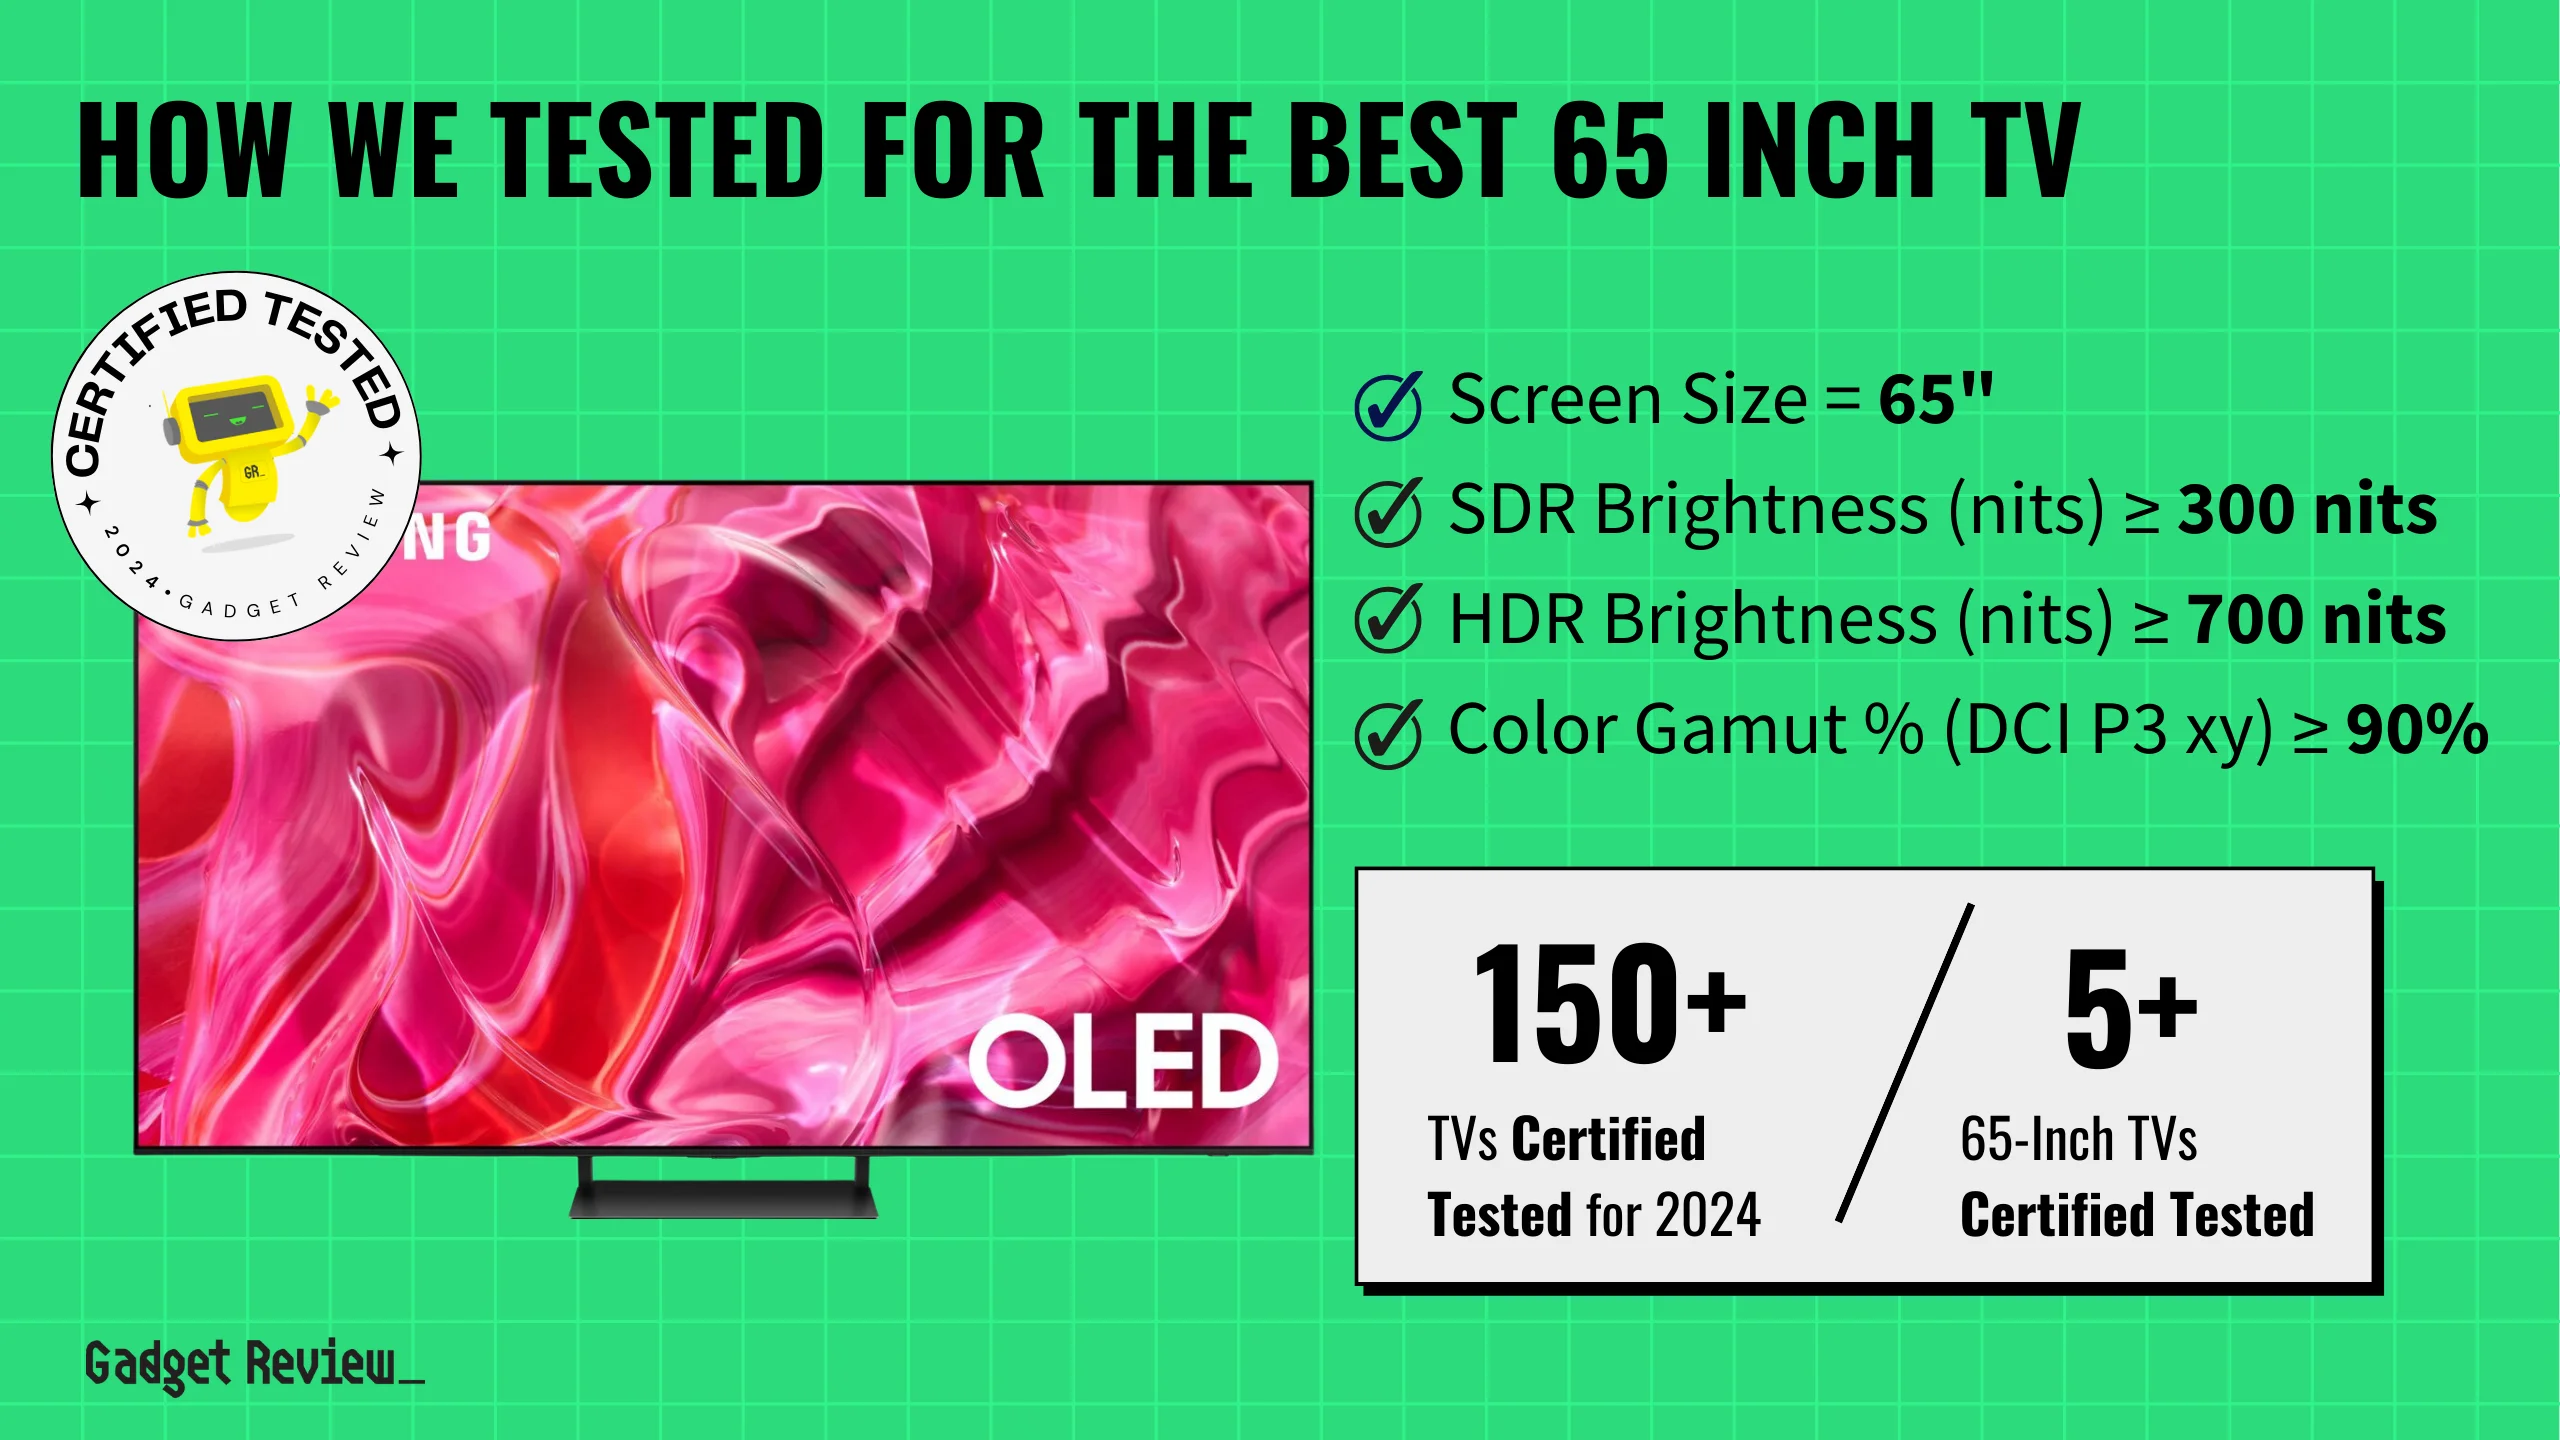 The Best 65 Inch TVs in 2024